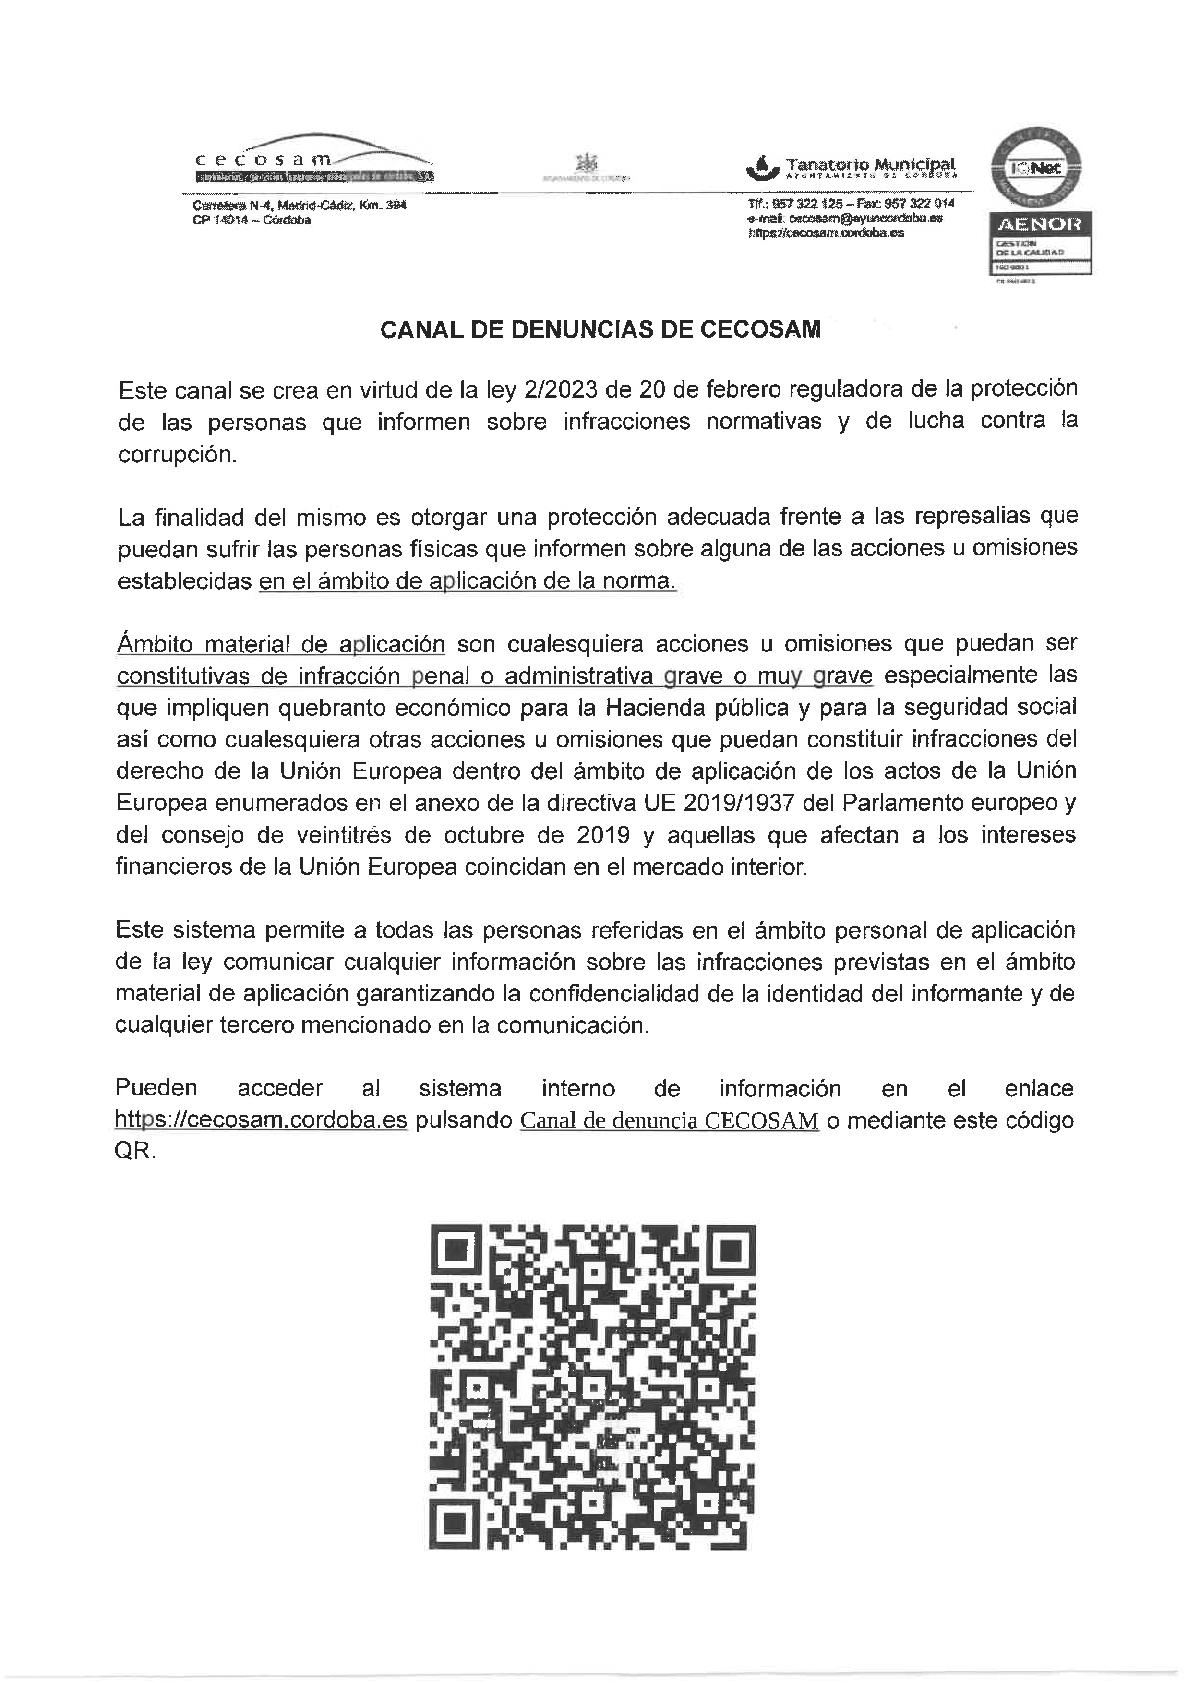 CANAL DE DENUNCIAS-001.jpg - 276.73 KB